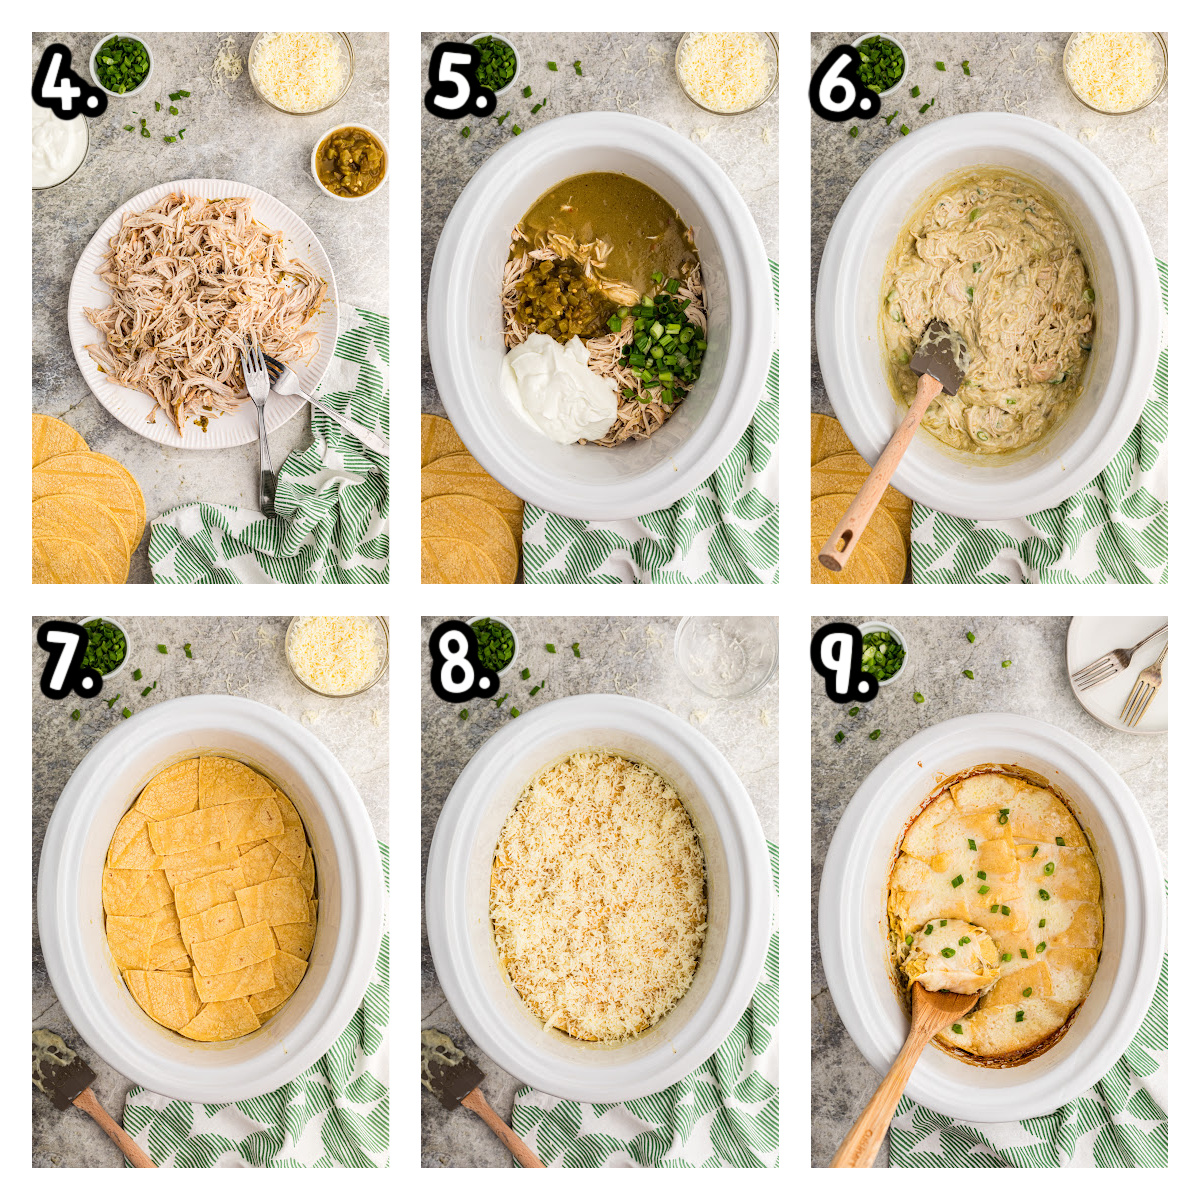 6 images showing how make enchiladas in a crockpot.